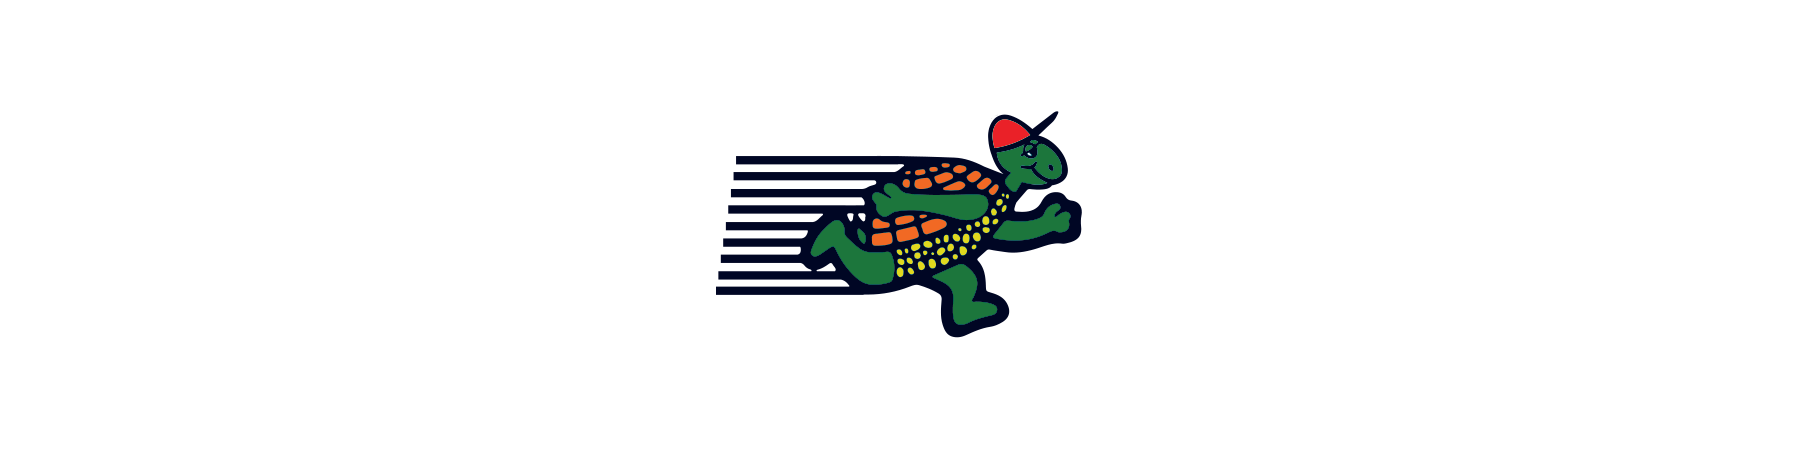 Running Turtle Logo 